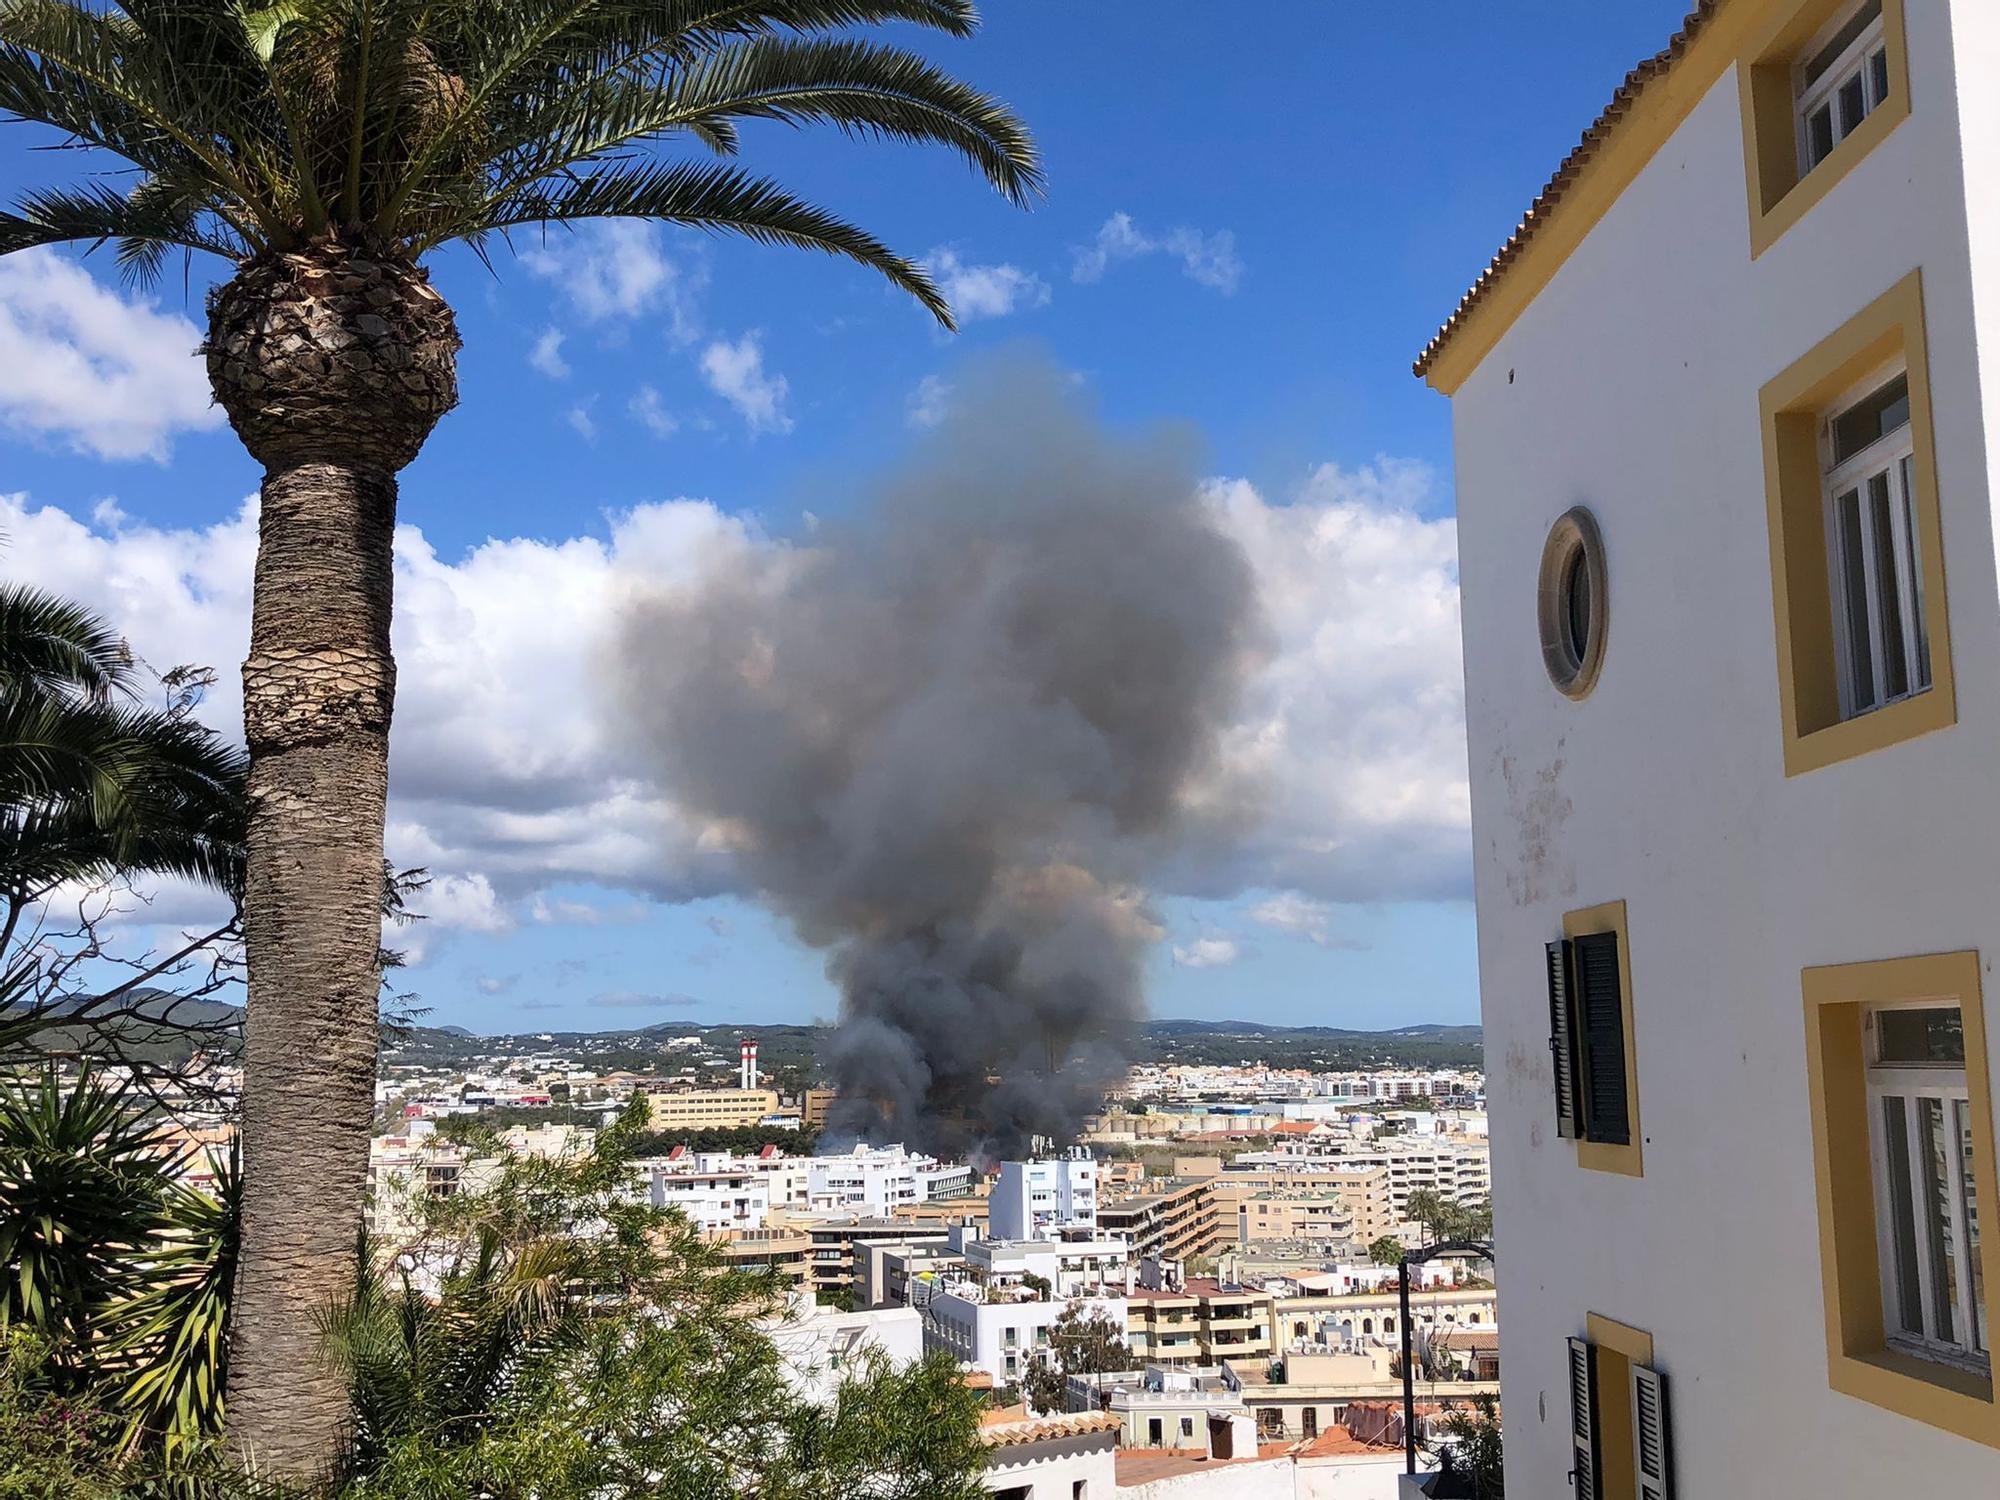 Galería del incendio de ses Feixes en Ibiza